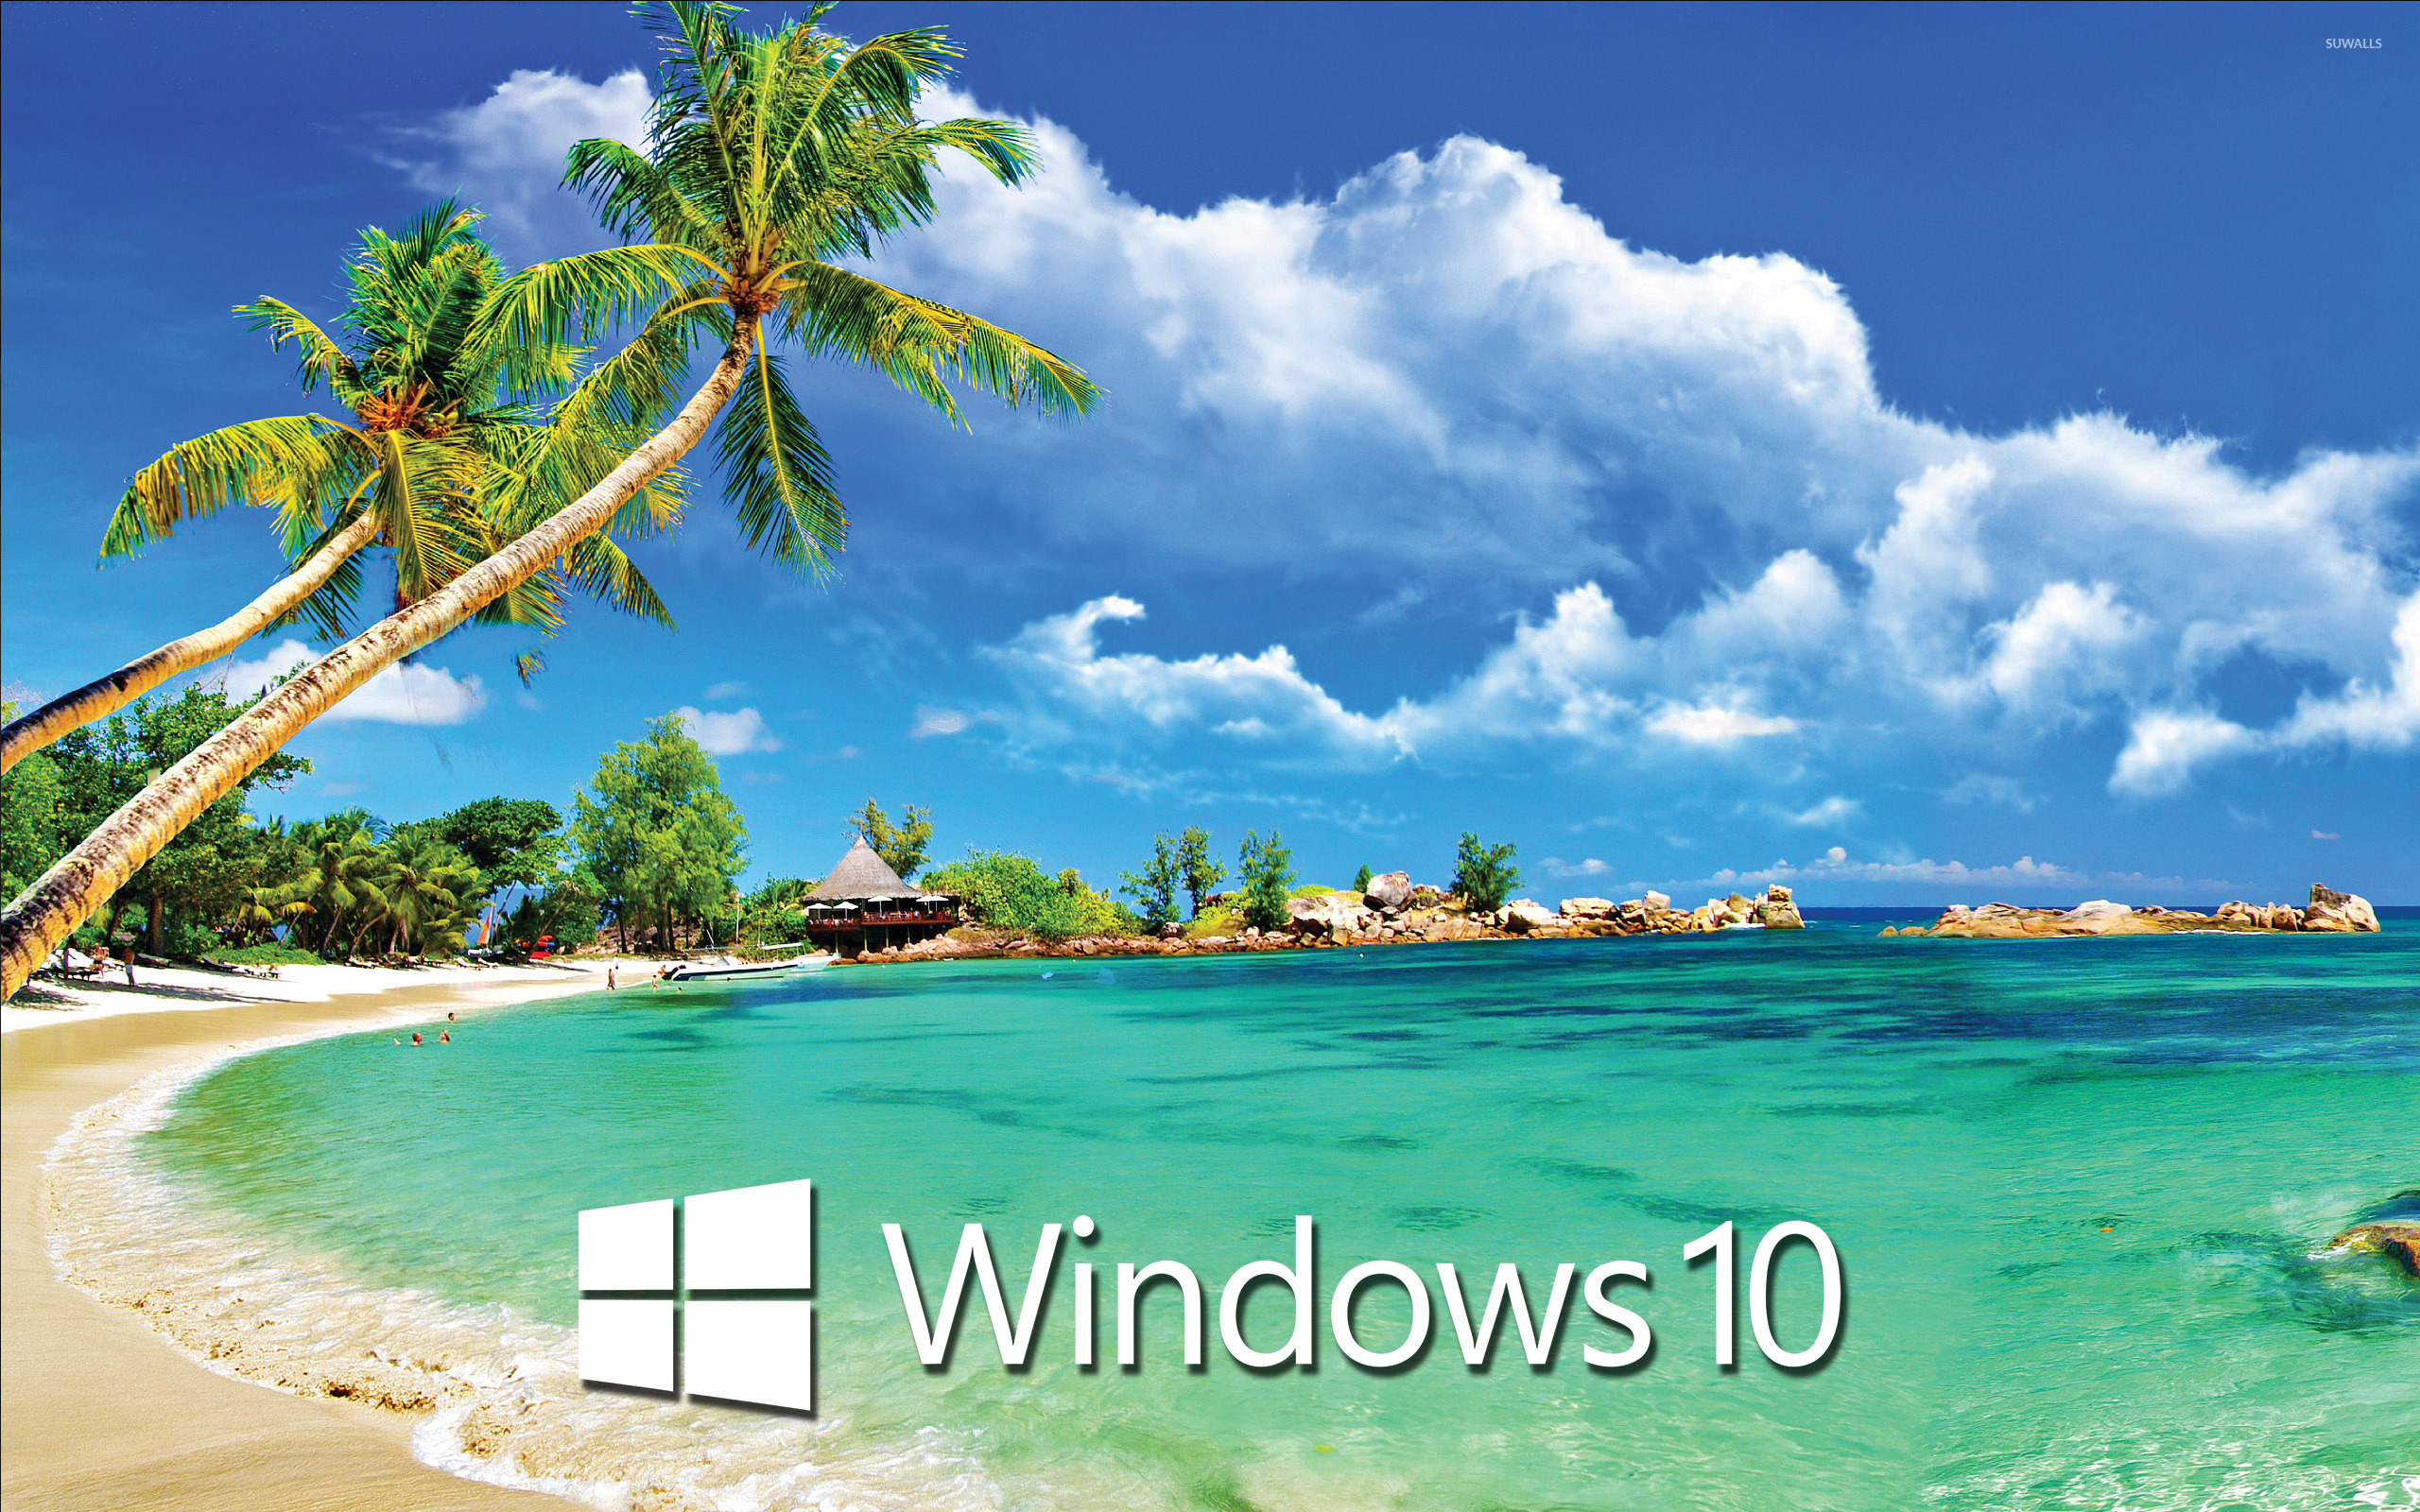 Windows 10 text logo on a tropical beach wallpaper - Computer ...